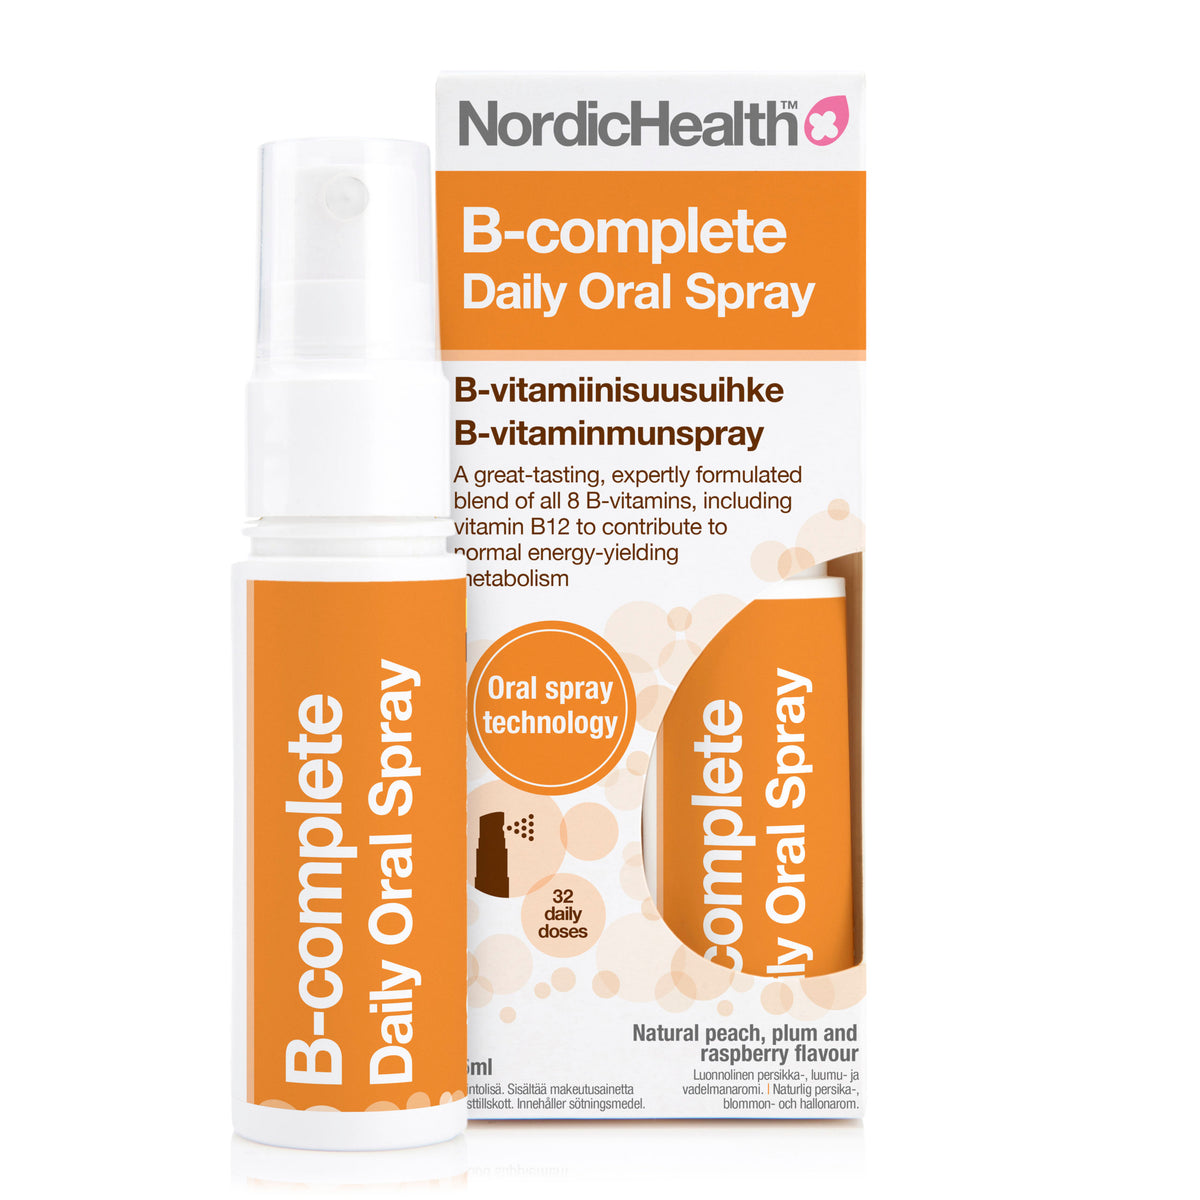 Nordic Health B-Complete Daily Oral Spray - B-Vitamiinisuusuihke 25 ml